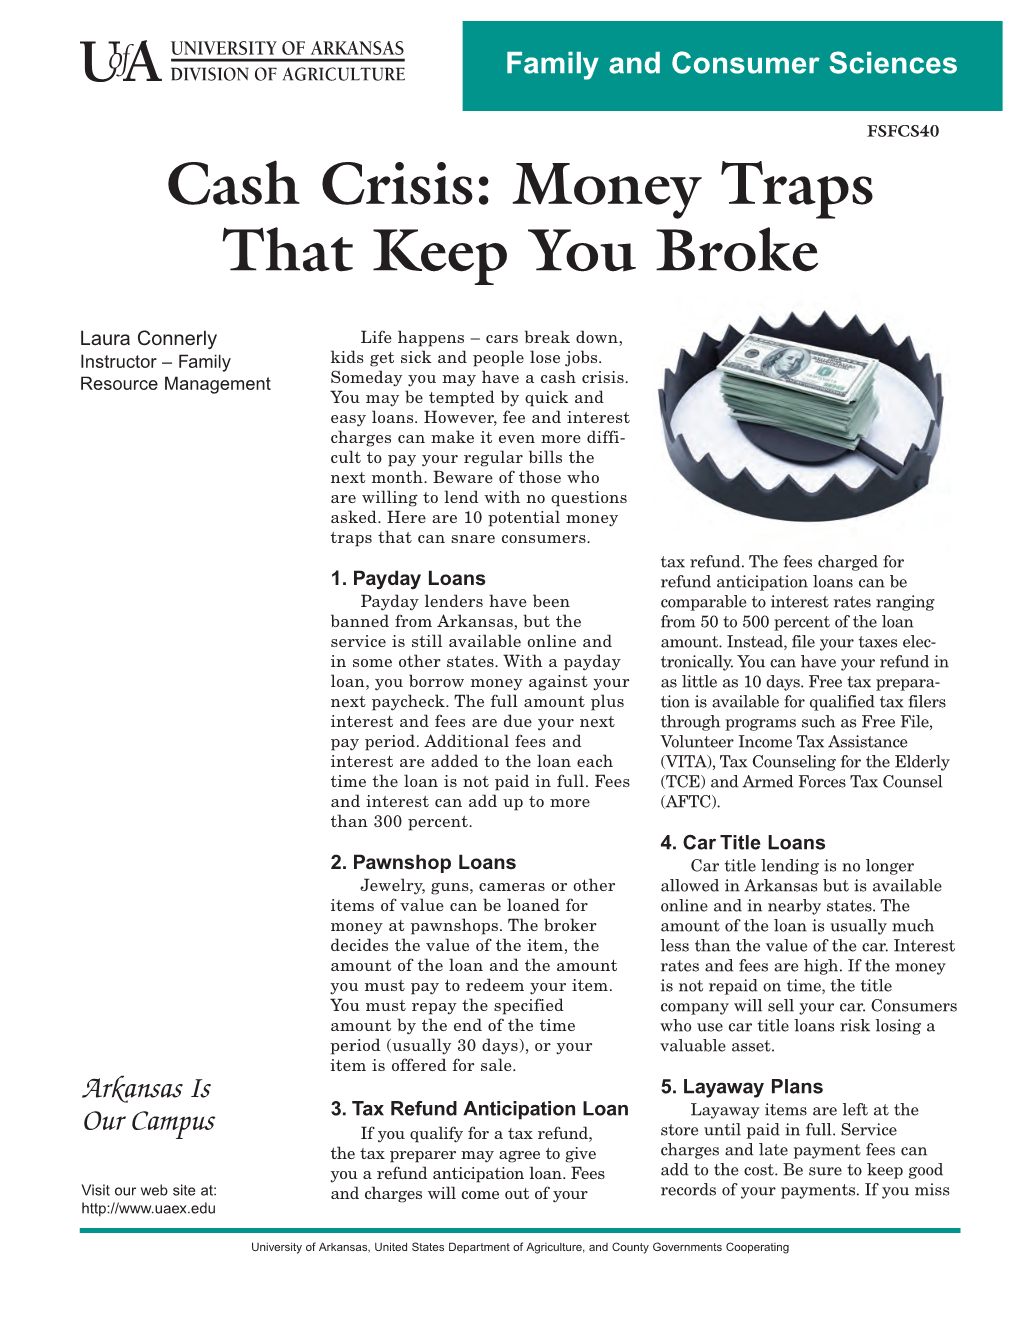 Cash Crisis: Money Traps That Keep You Broke